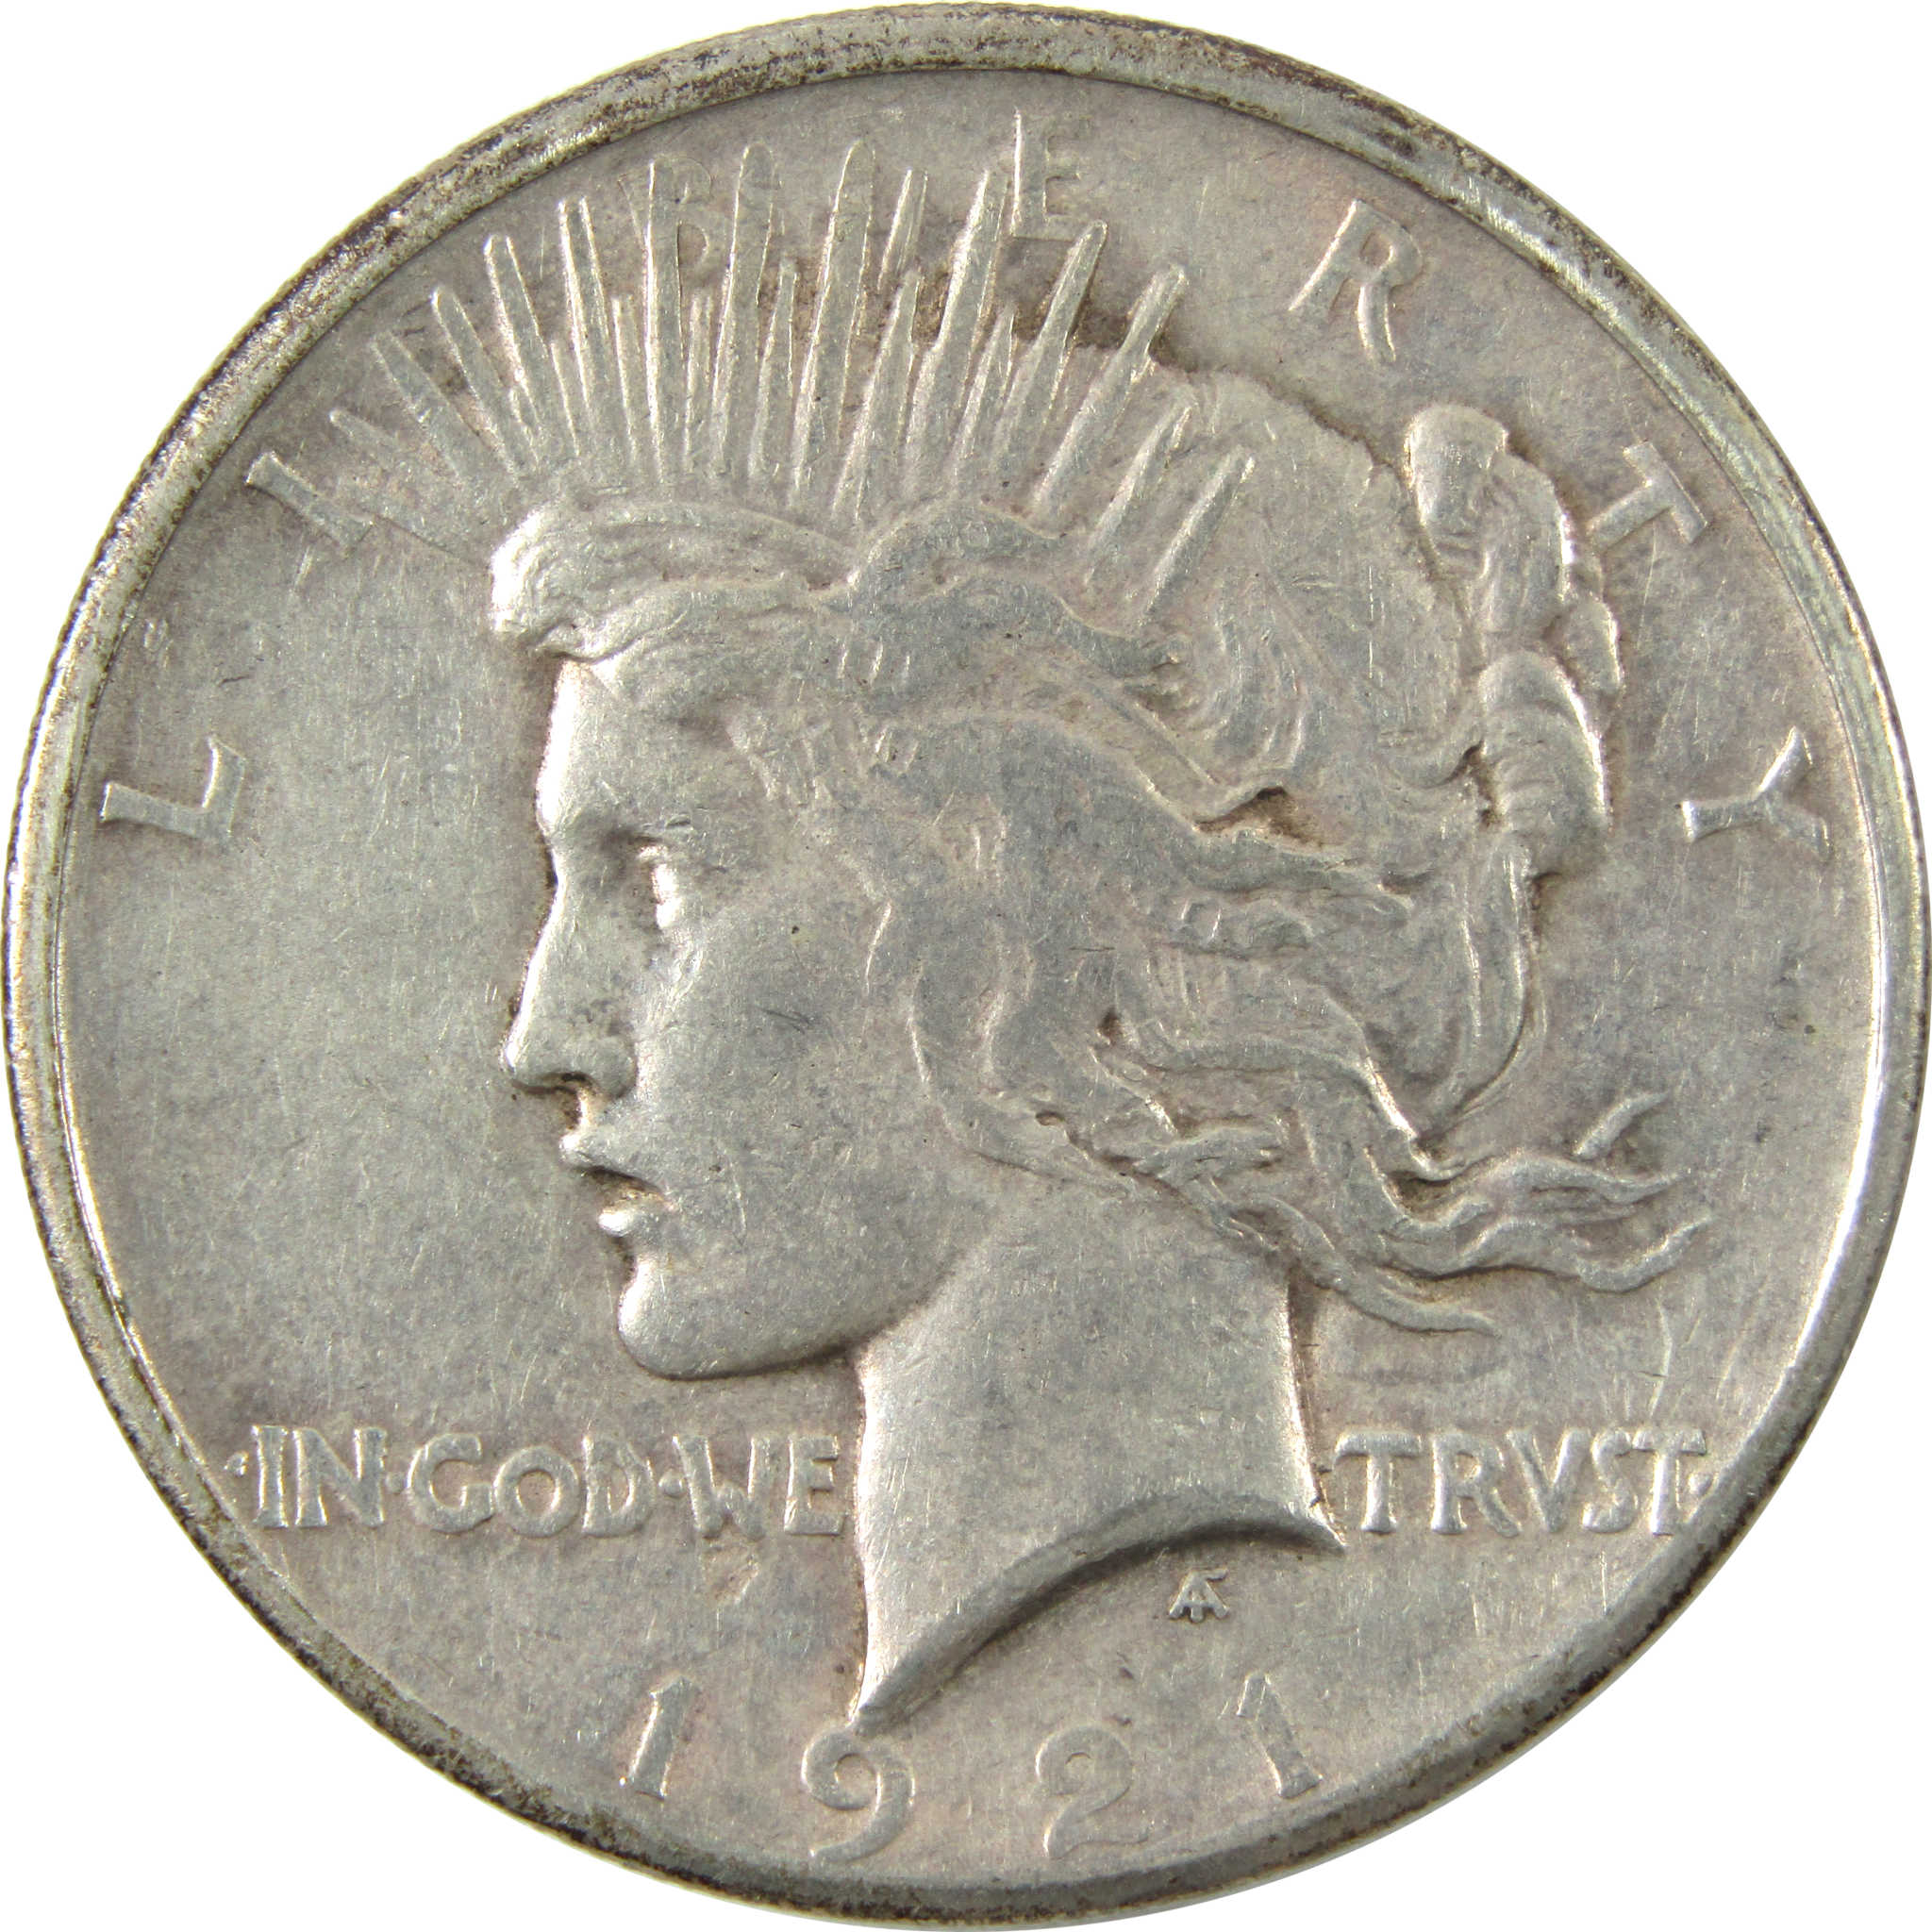 1921 High Relief Peace Dollar VF Very Fine Silver $1 Coin SKU:I14183